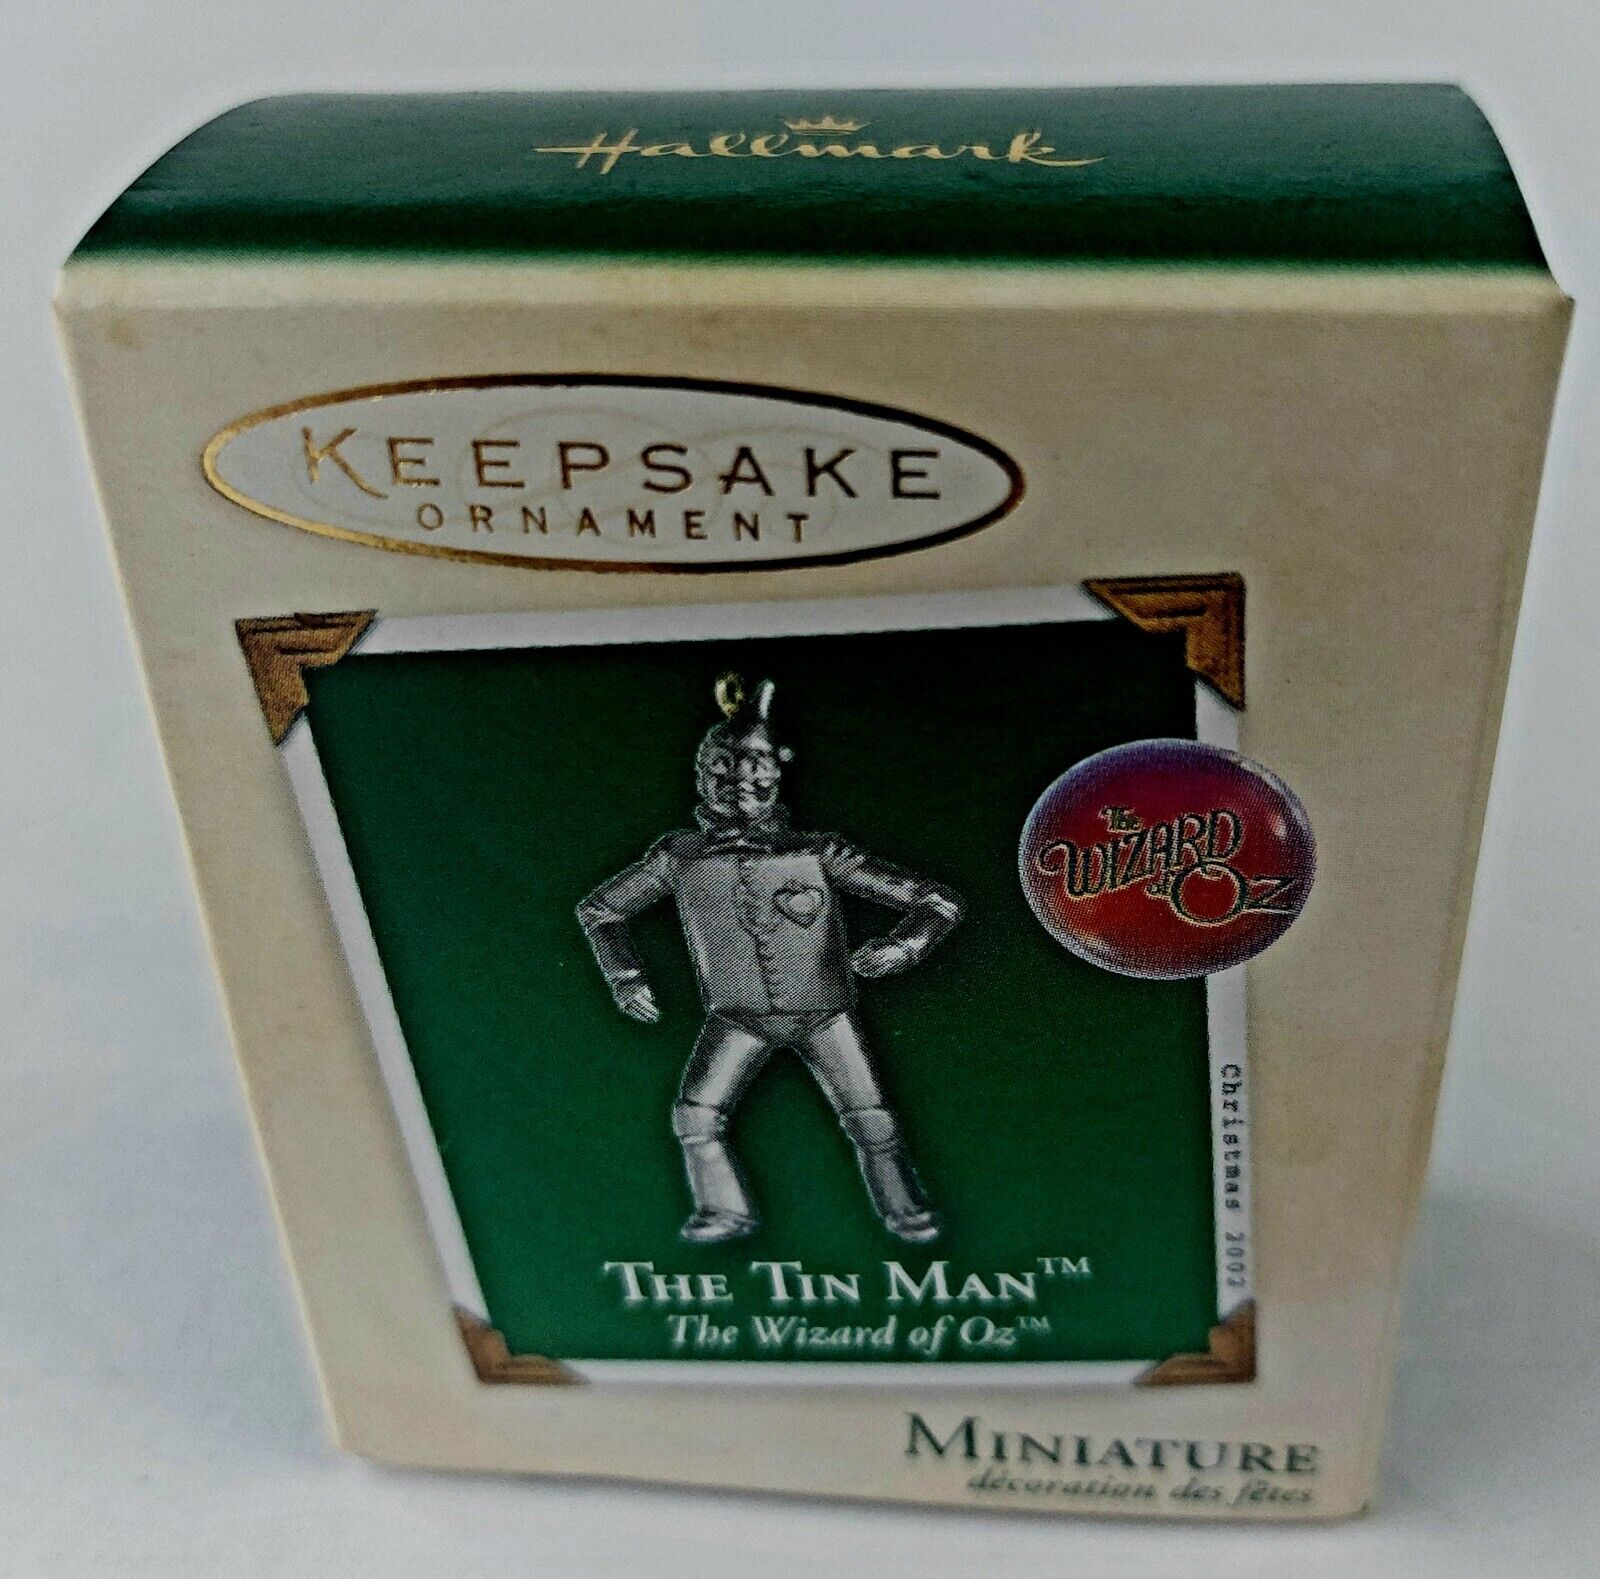 NEW Hallmark Keepsake Ornament The Wizard of Oz Miniature Mini The Tin Man 2002